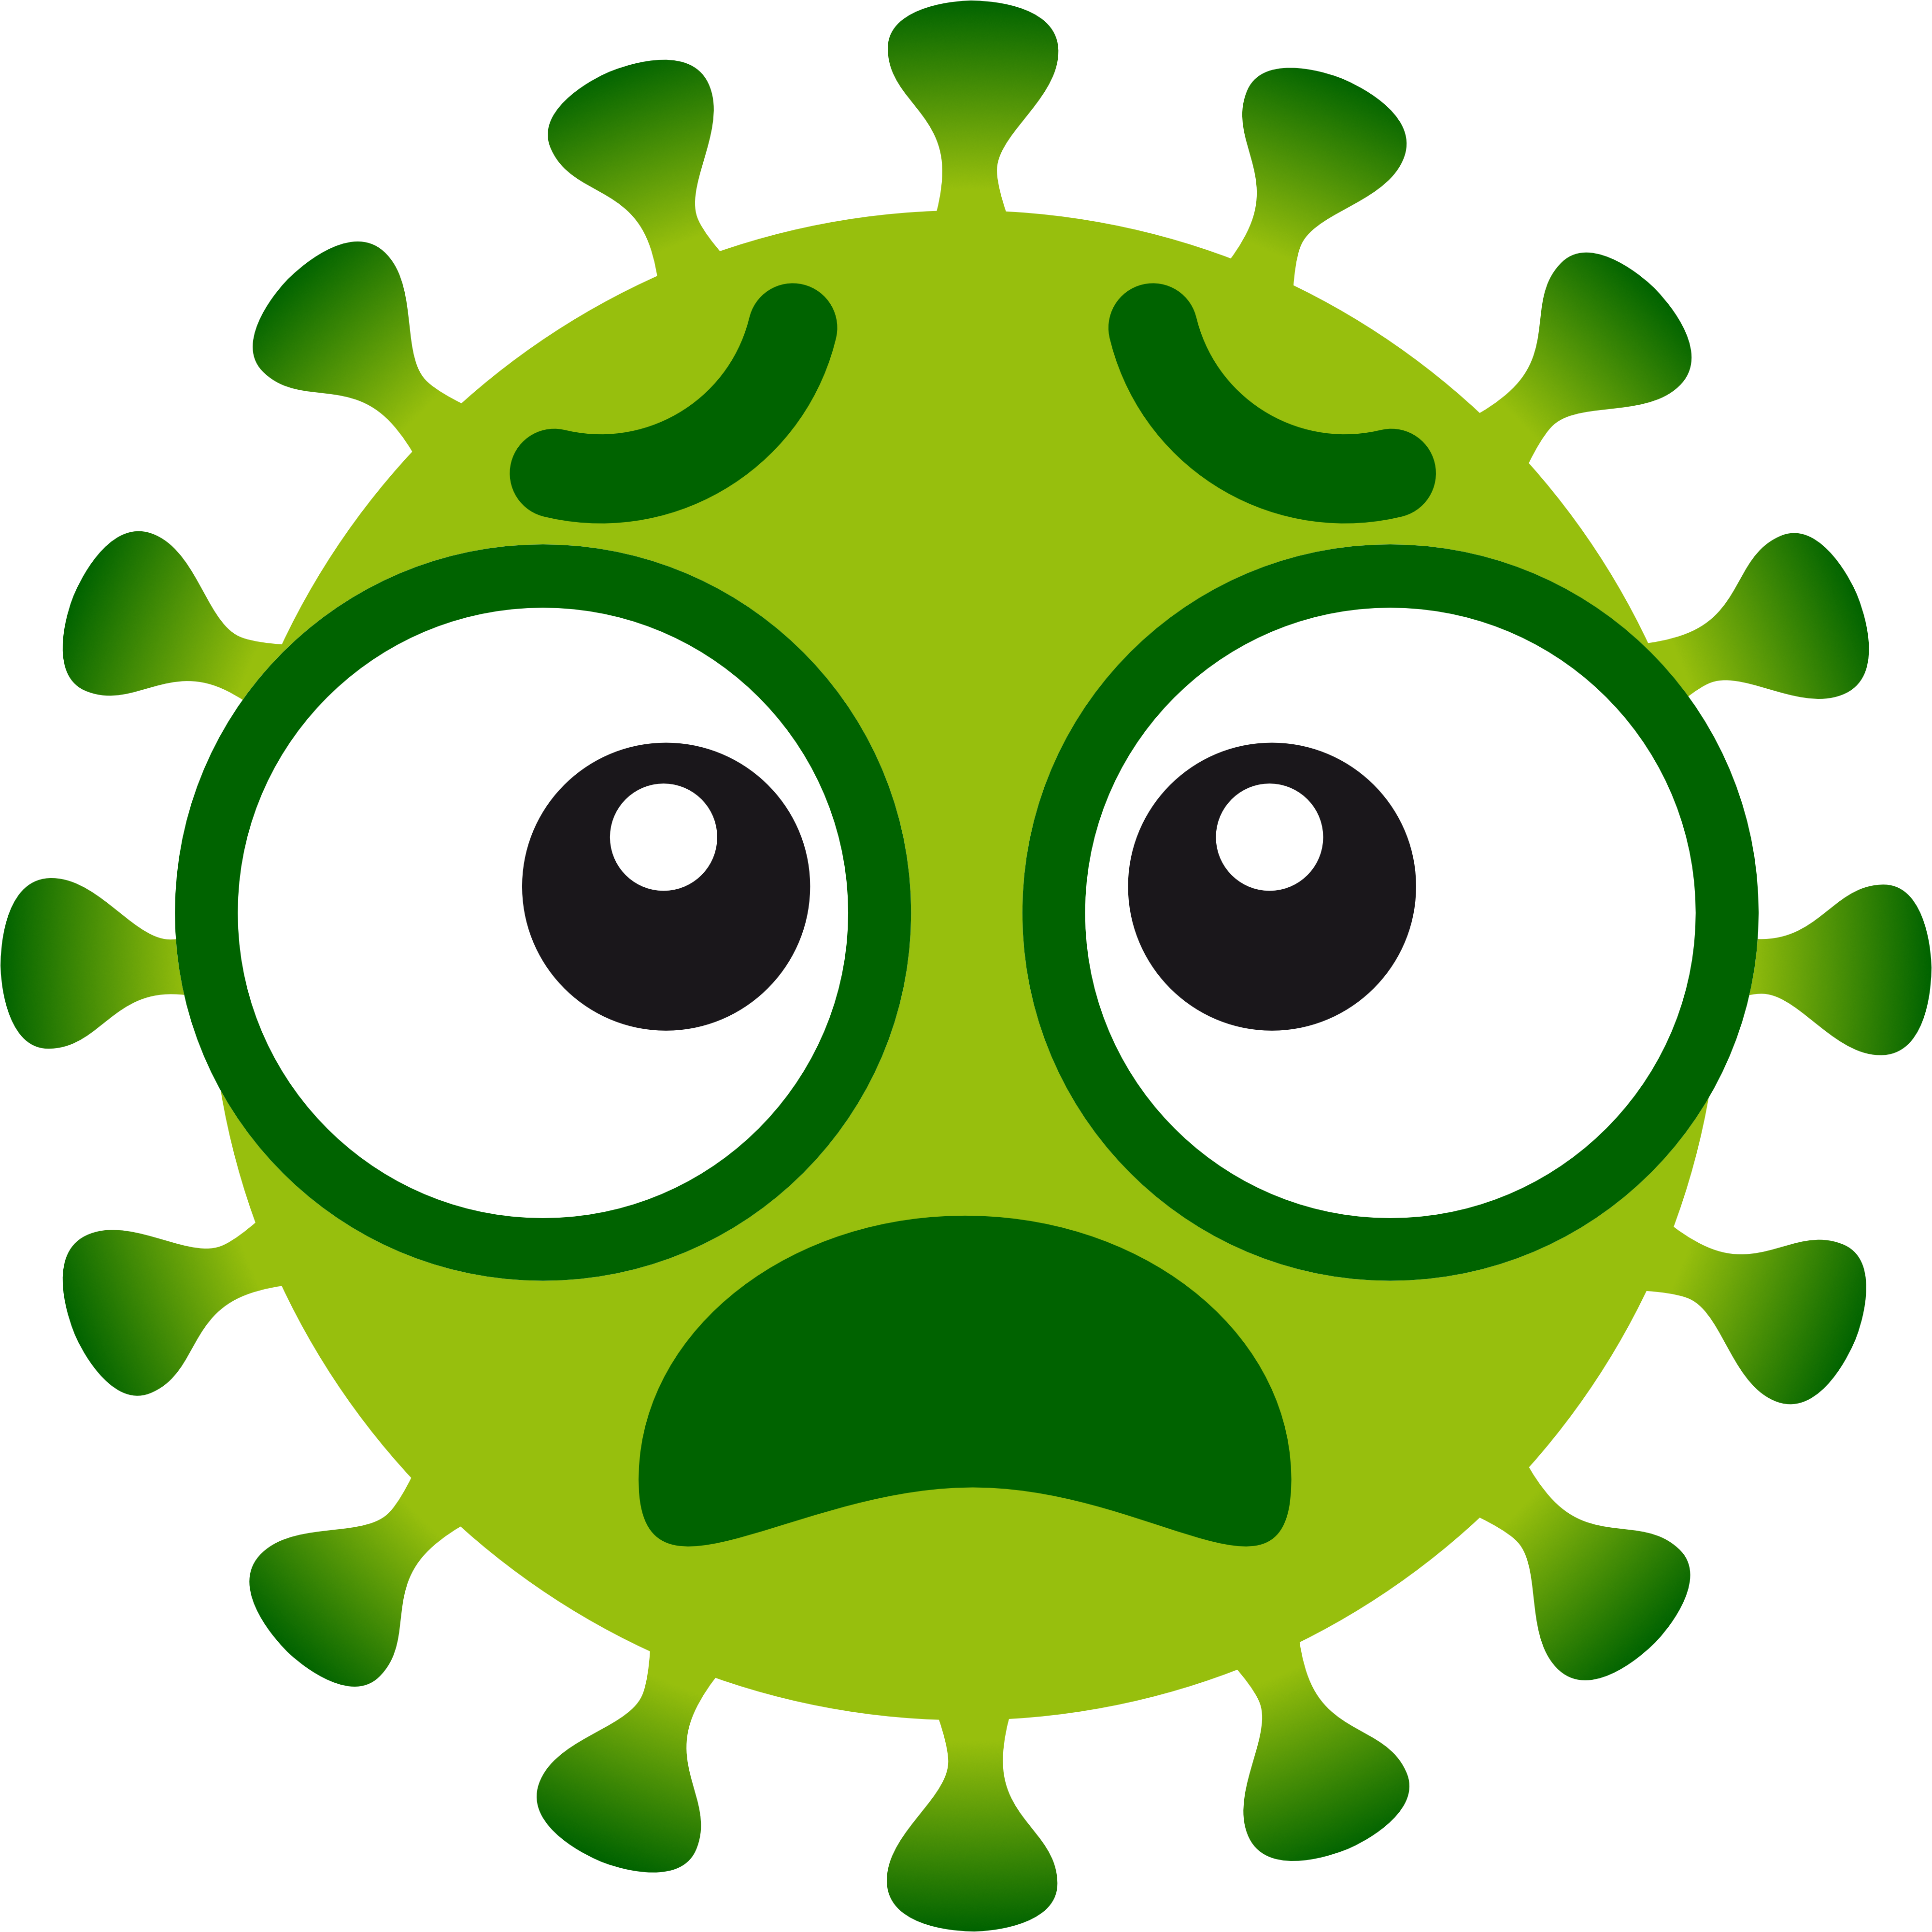 Значок вируса коронавирус. Вирус на прозрачном фоне. Микробы для детей. Коронавирус голова